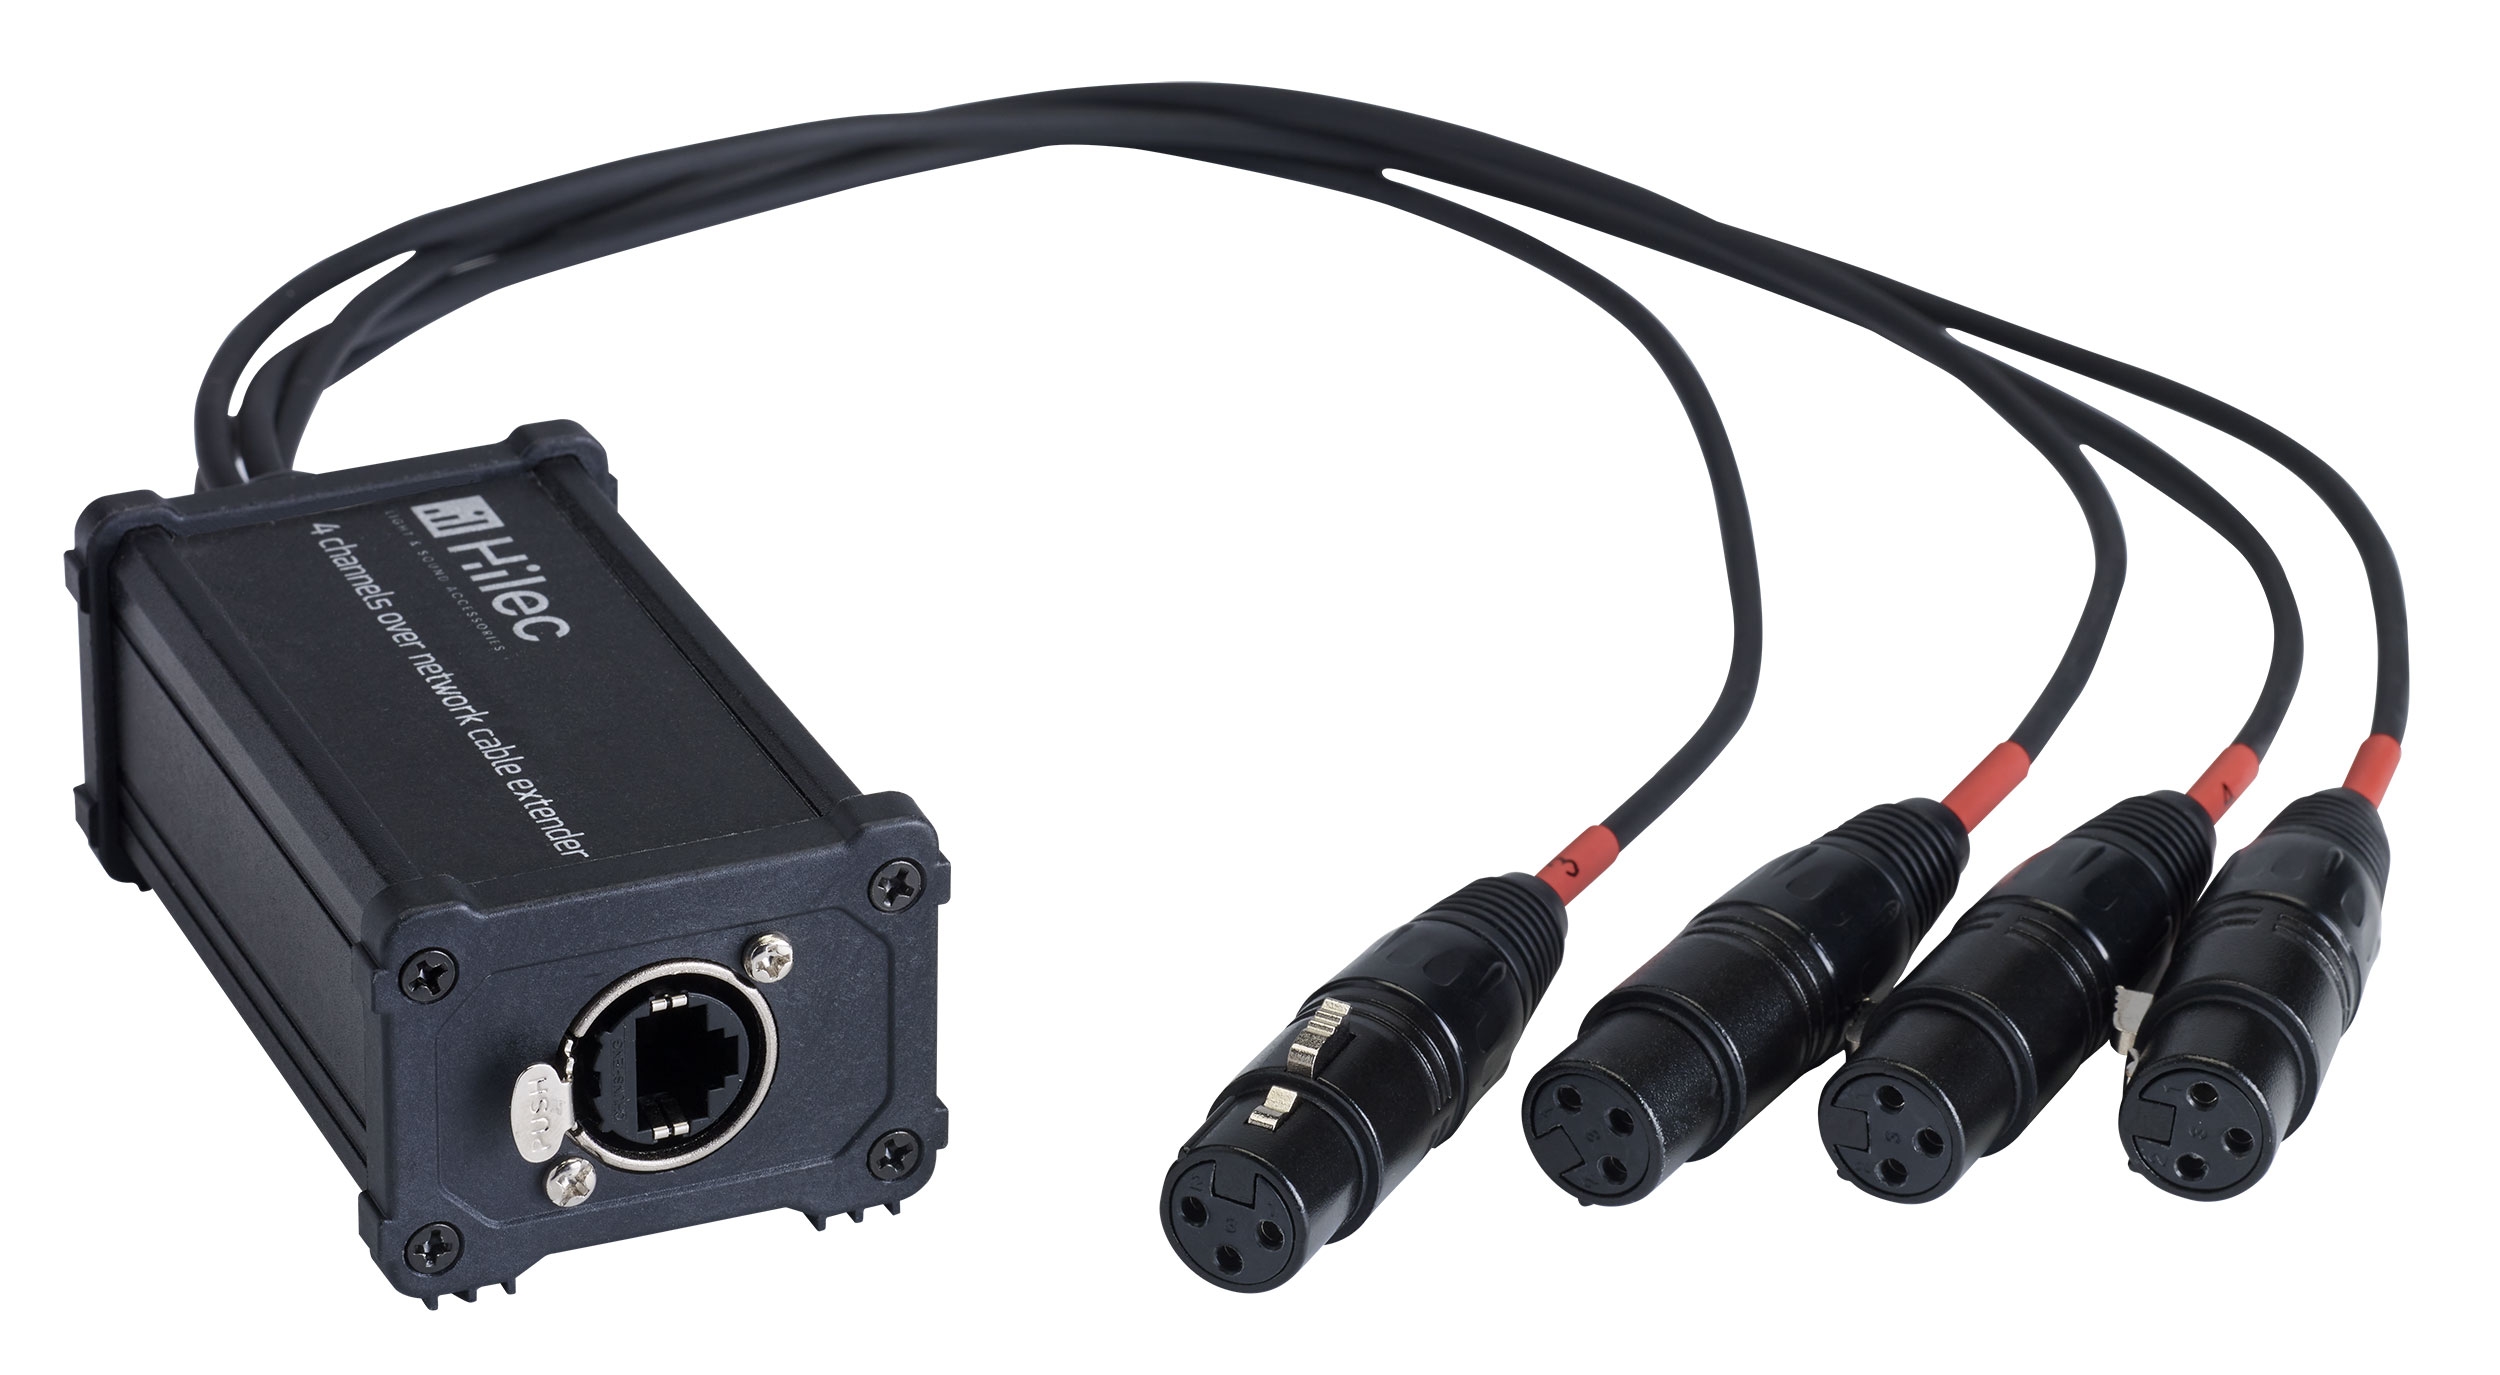 RJ45 / XLR3F adapter box for audio or DMX signal